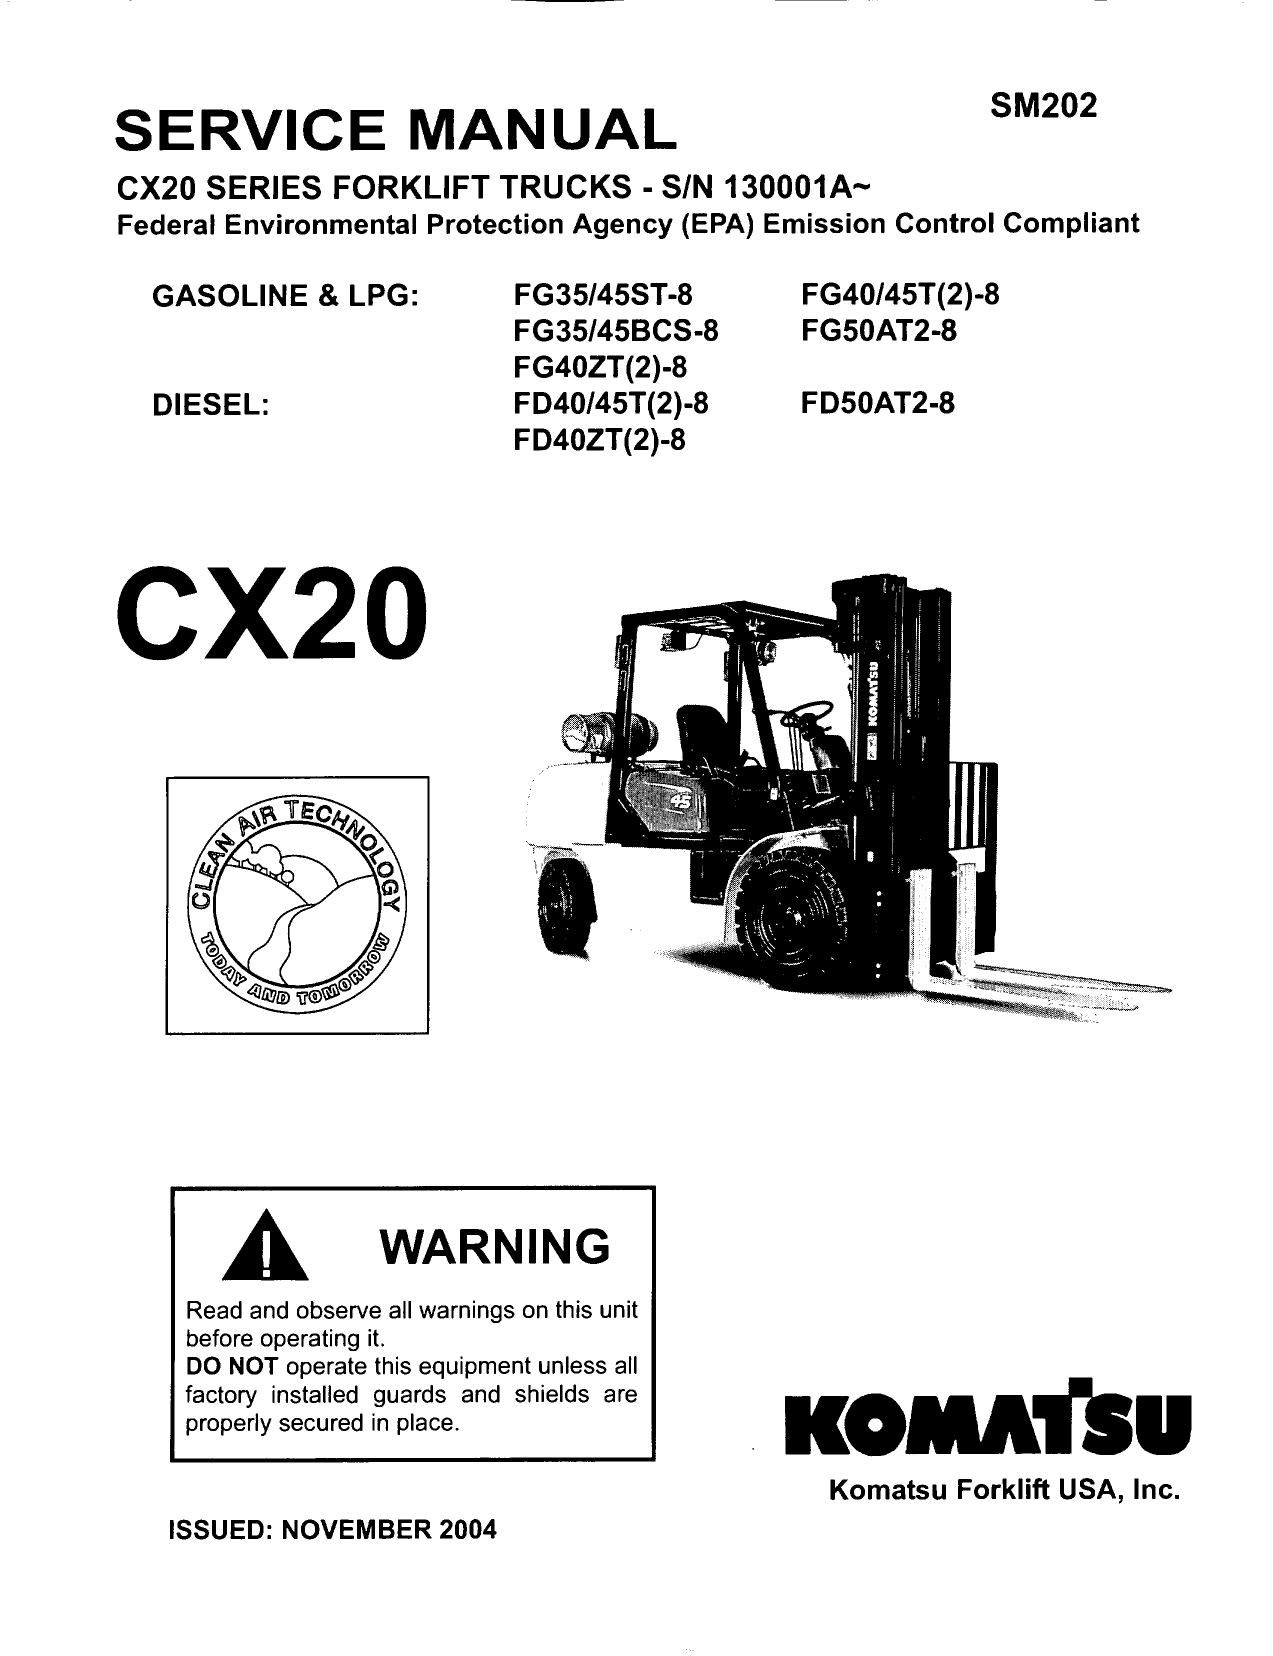 Service Manual Komatsu Forklift Usa Inc V3 1 Manualzz